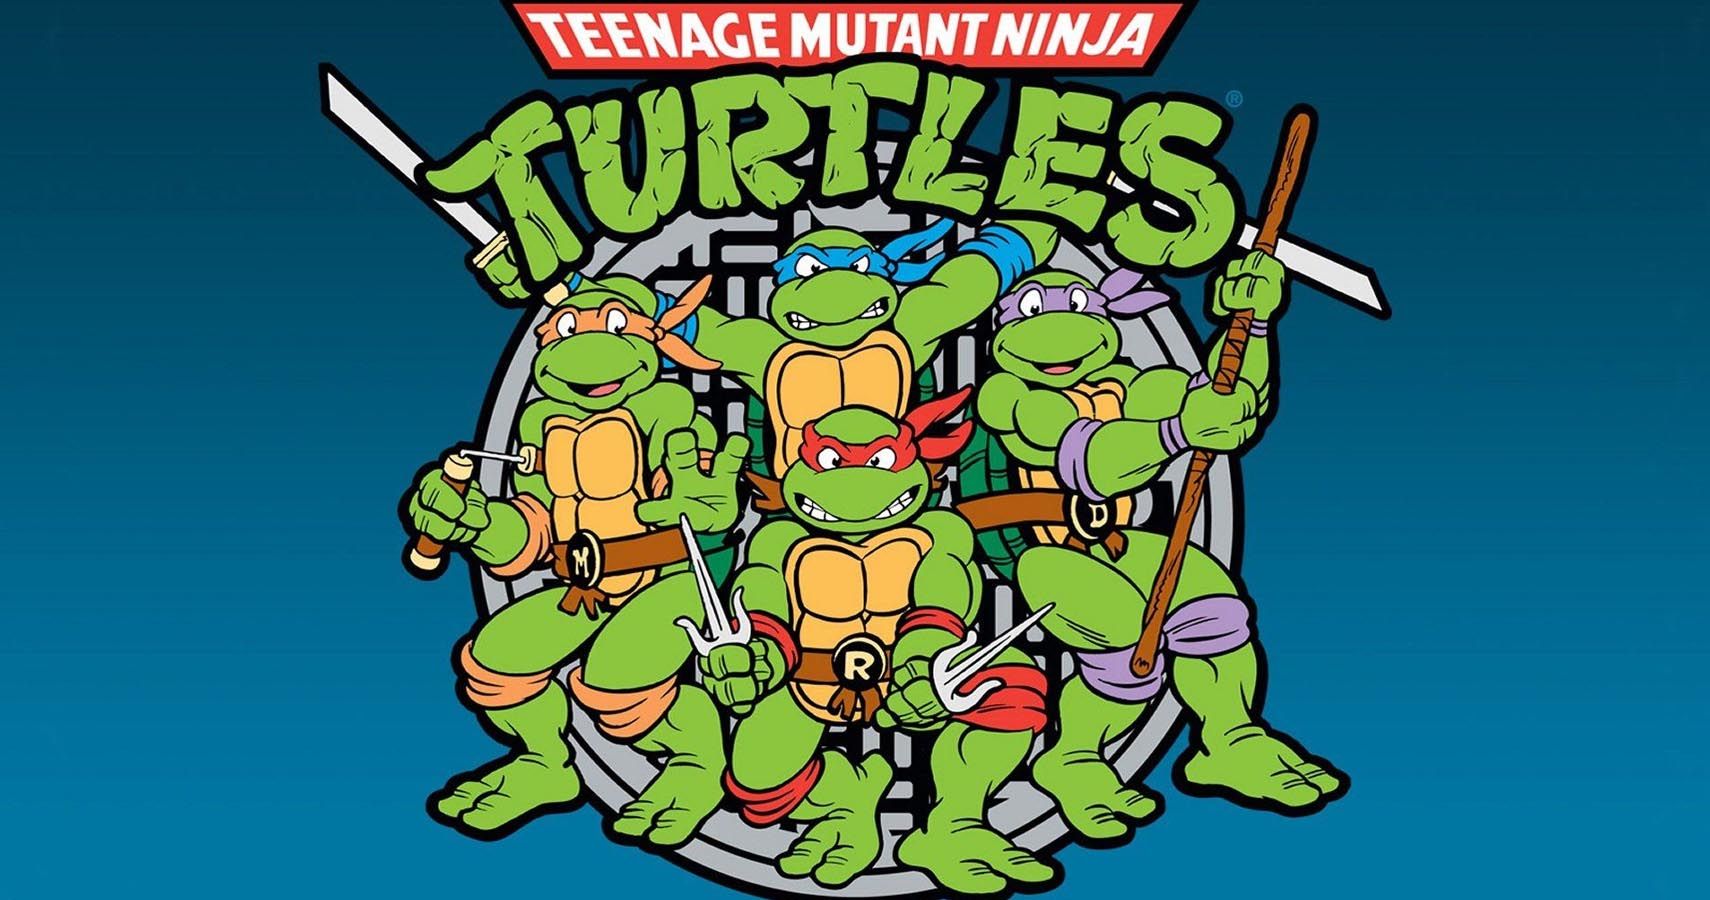 Animasyonlu Teenage Mutant Ninja Turtles gösterisinin orijinal posteri